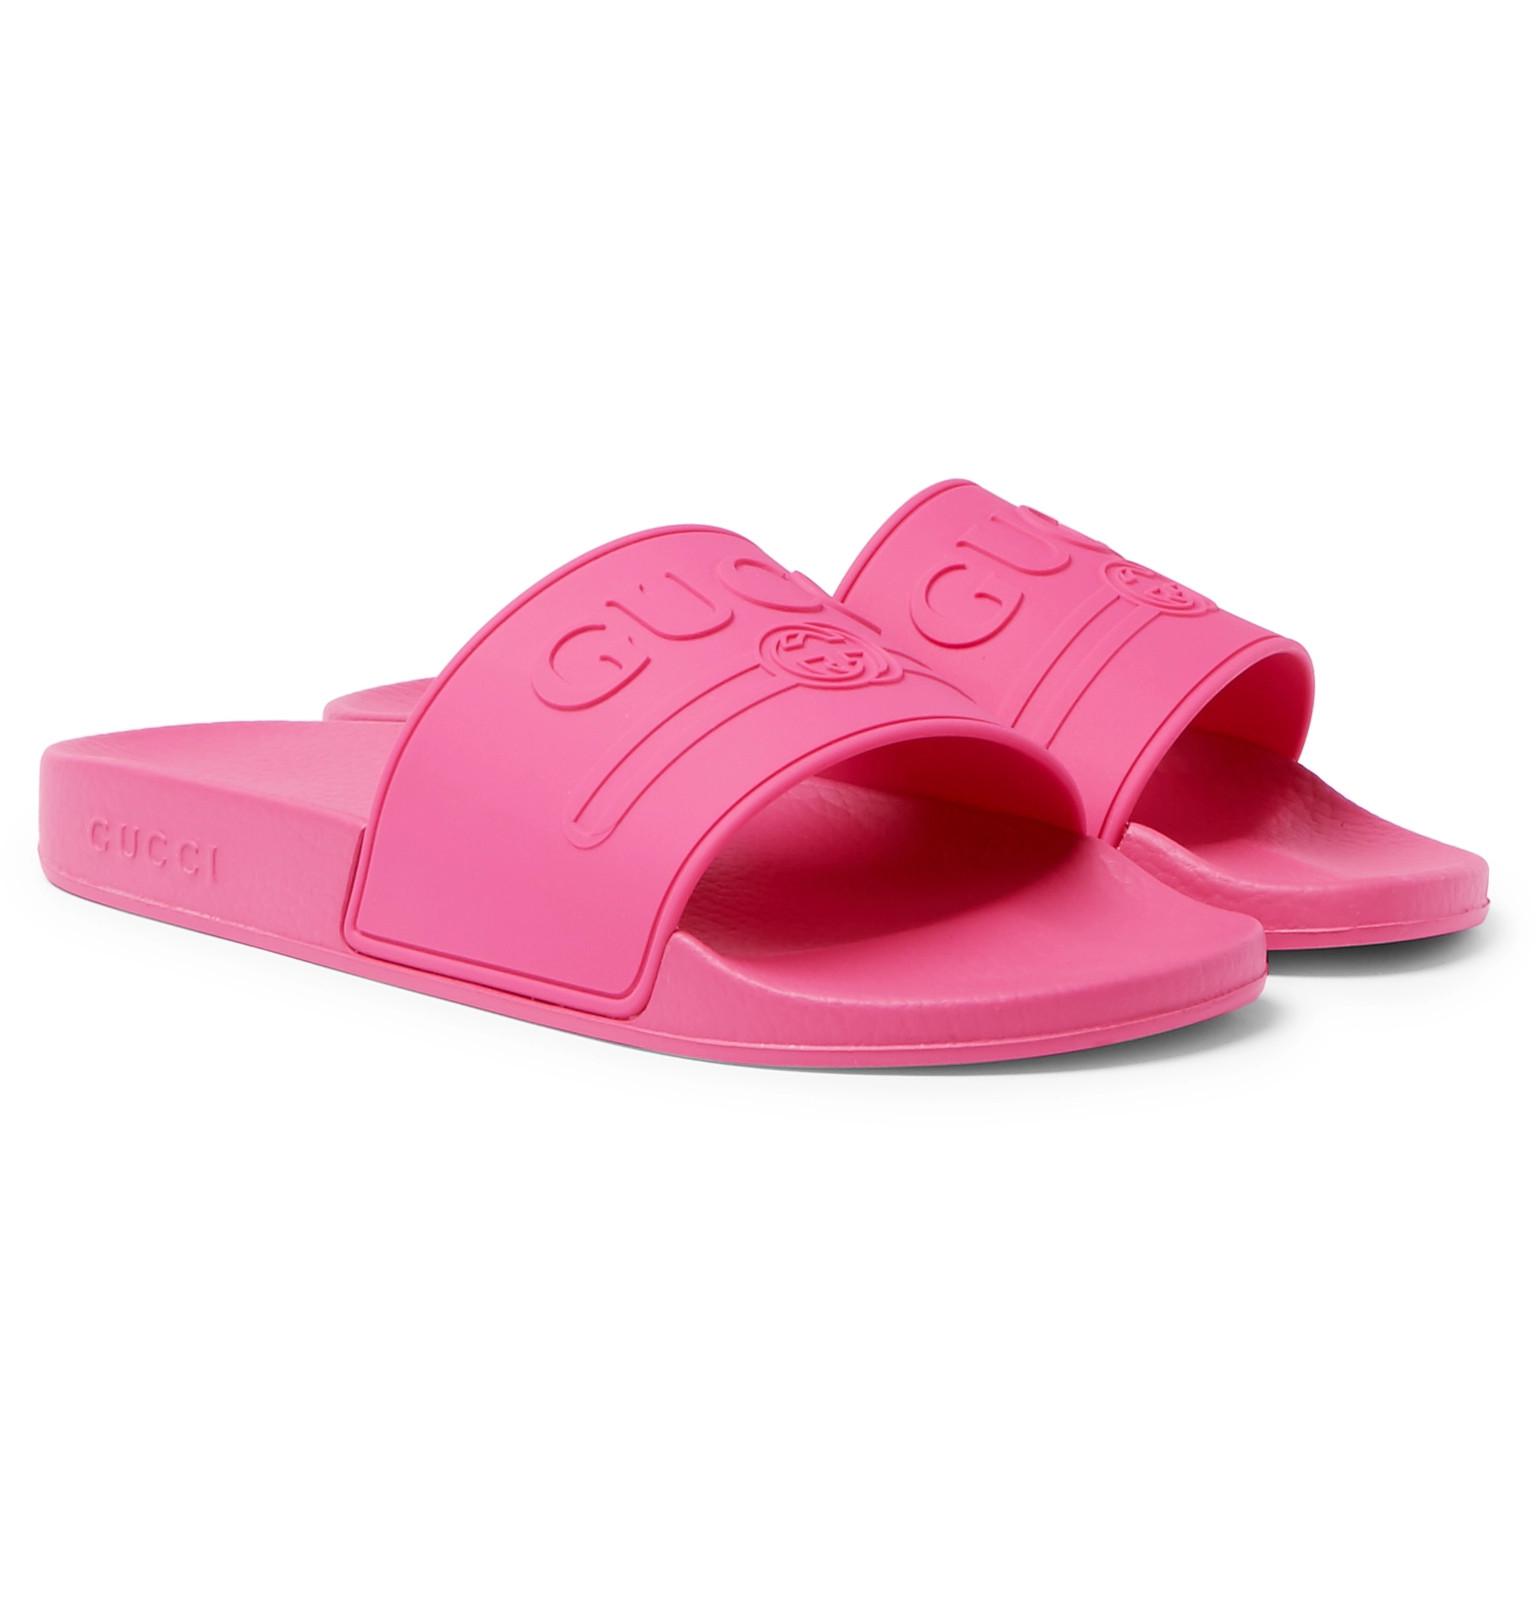 gucci flip flops pink Shop Clothing & Shoes Online